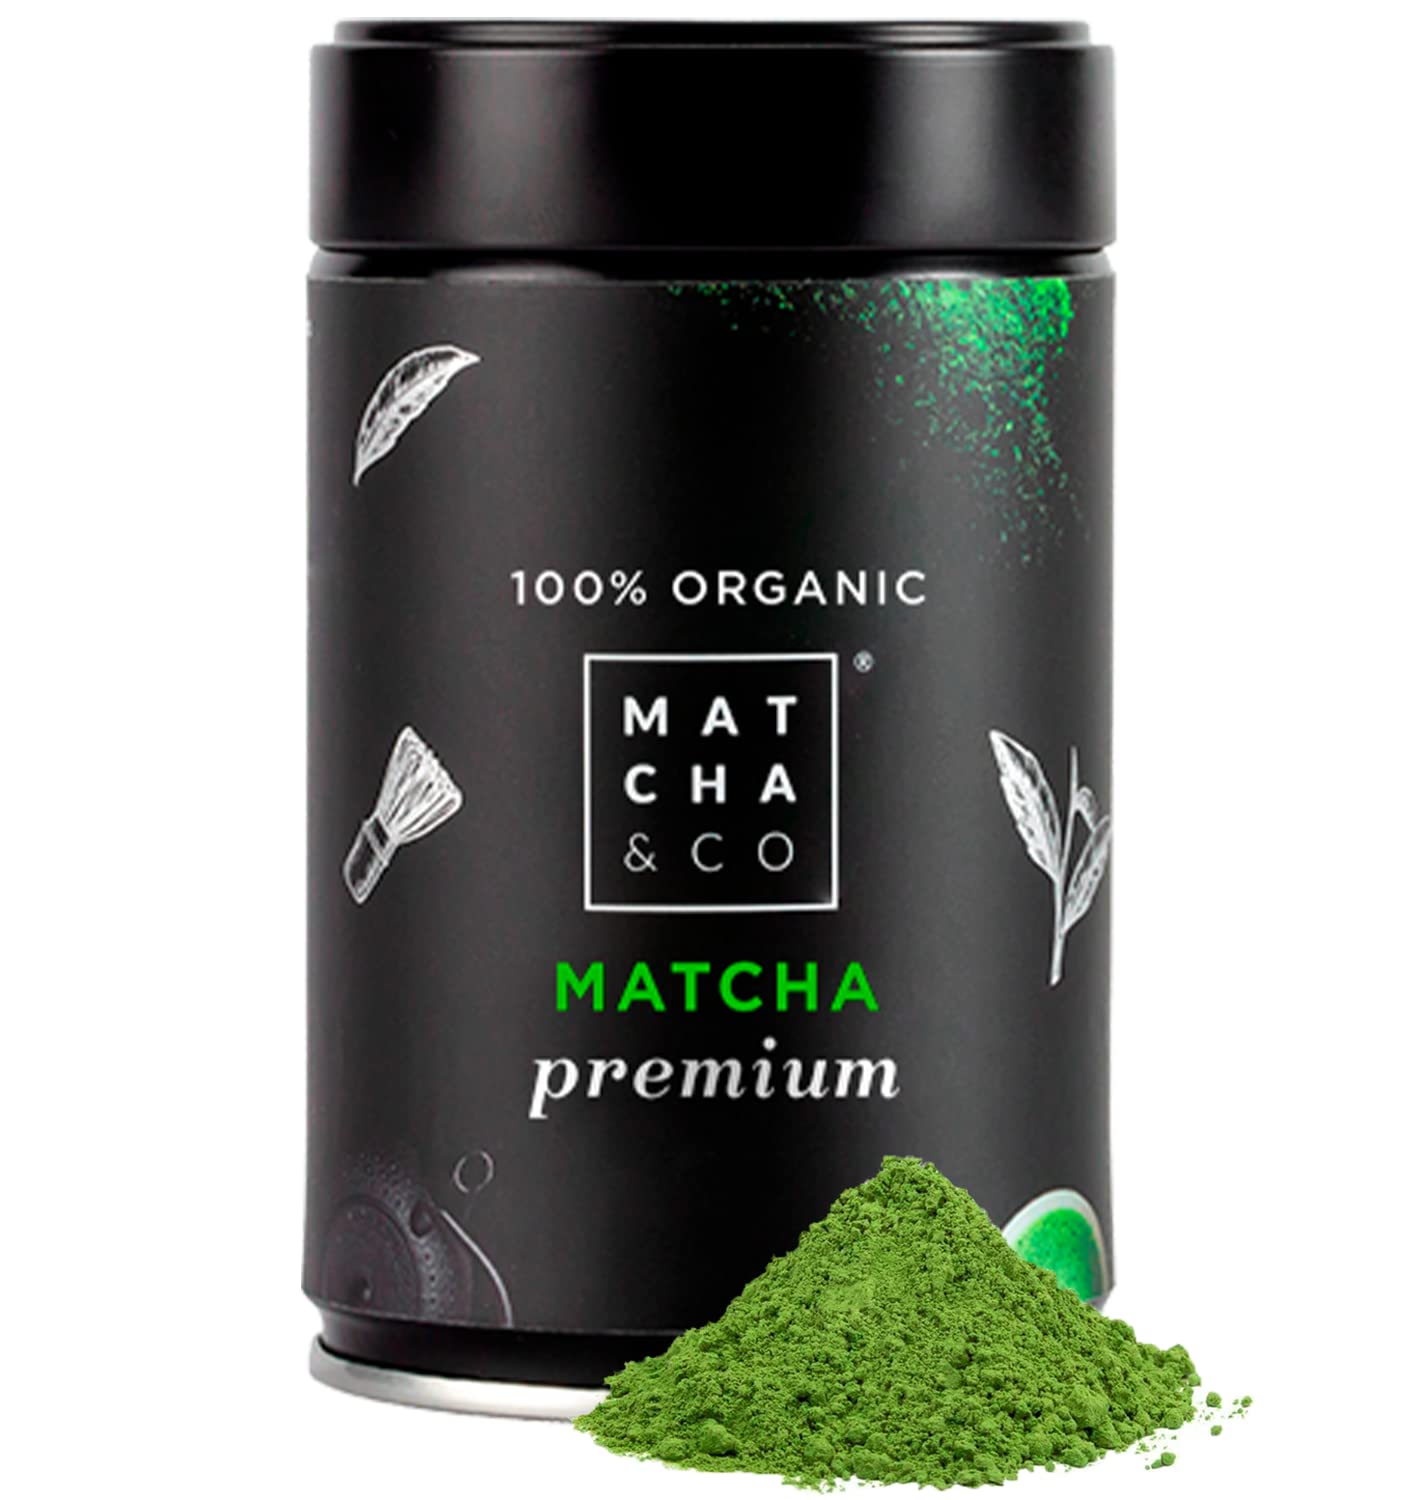 Ceremonial Matcha Green Tea Powder